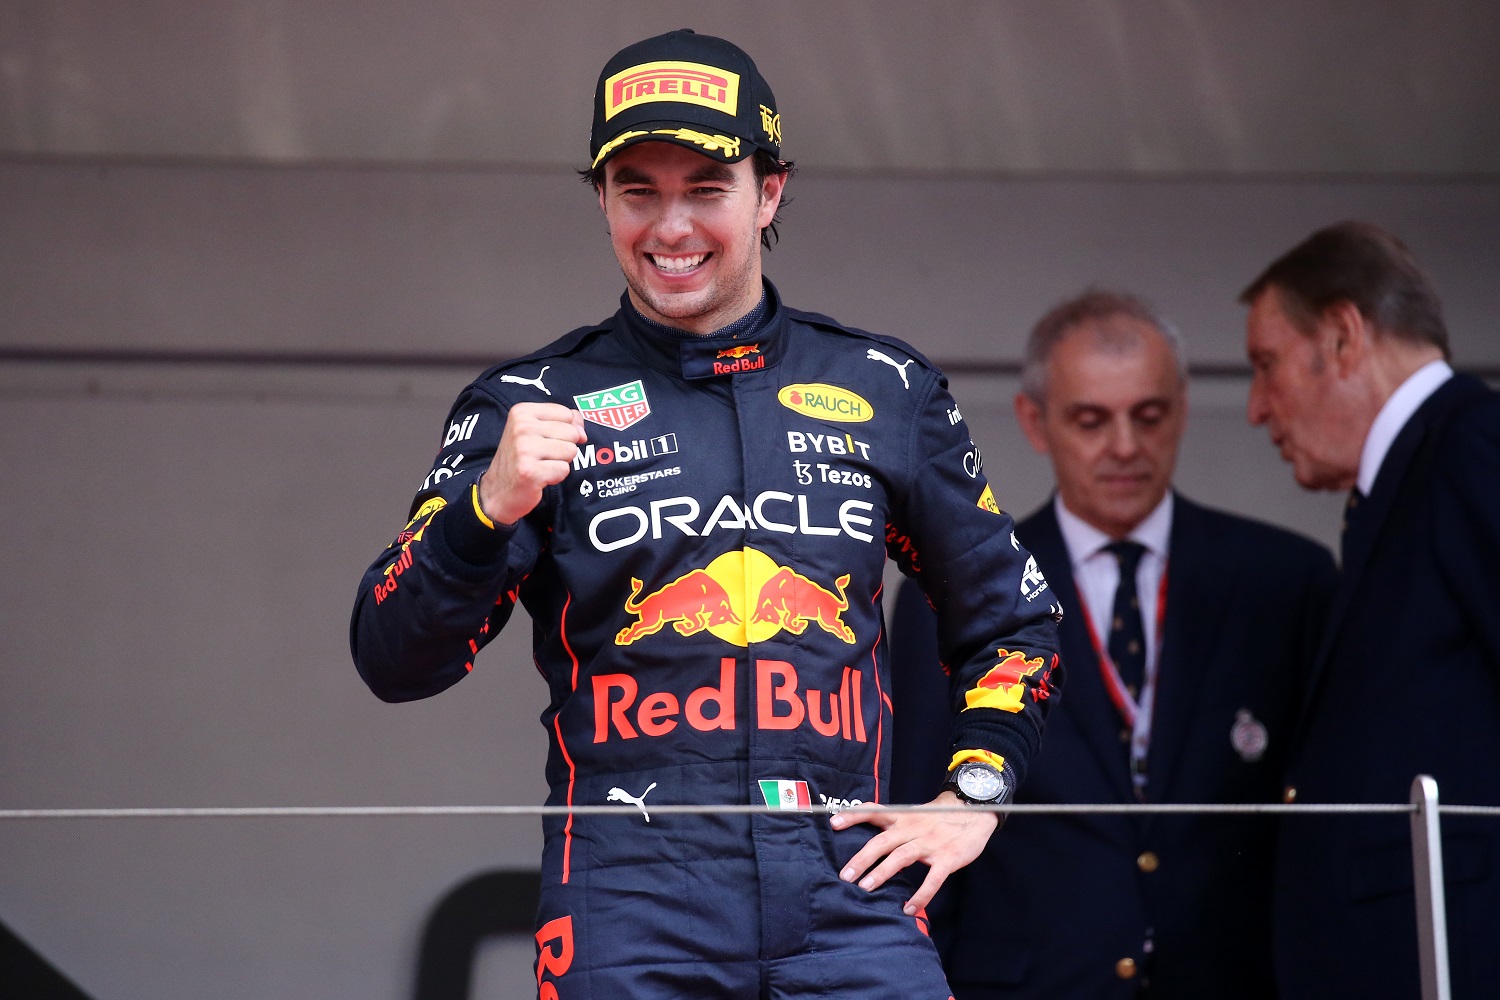 Sergio Perez of Red Bull Racing celebrates on the podium after winning the Formula 1 Grand Prix of Monaco.